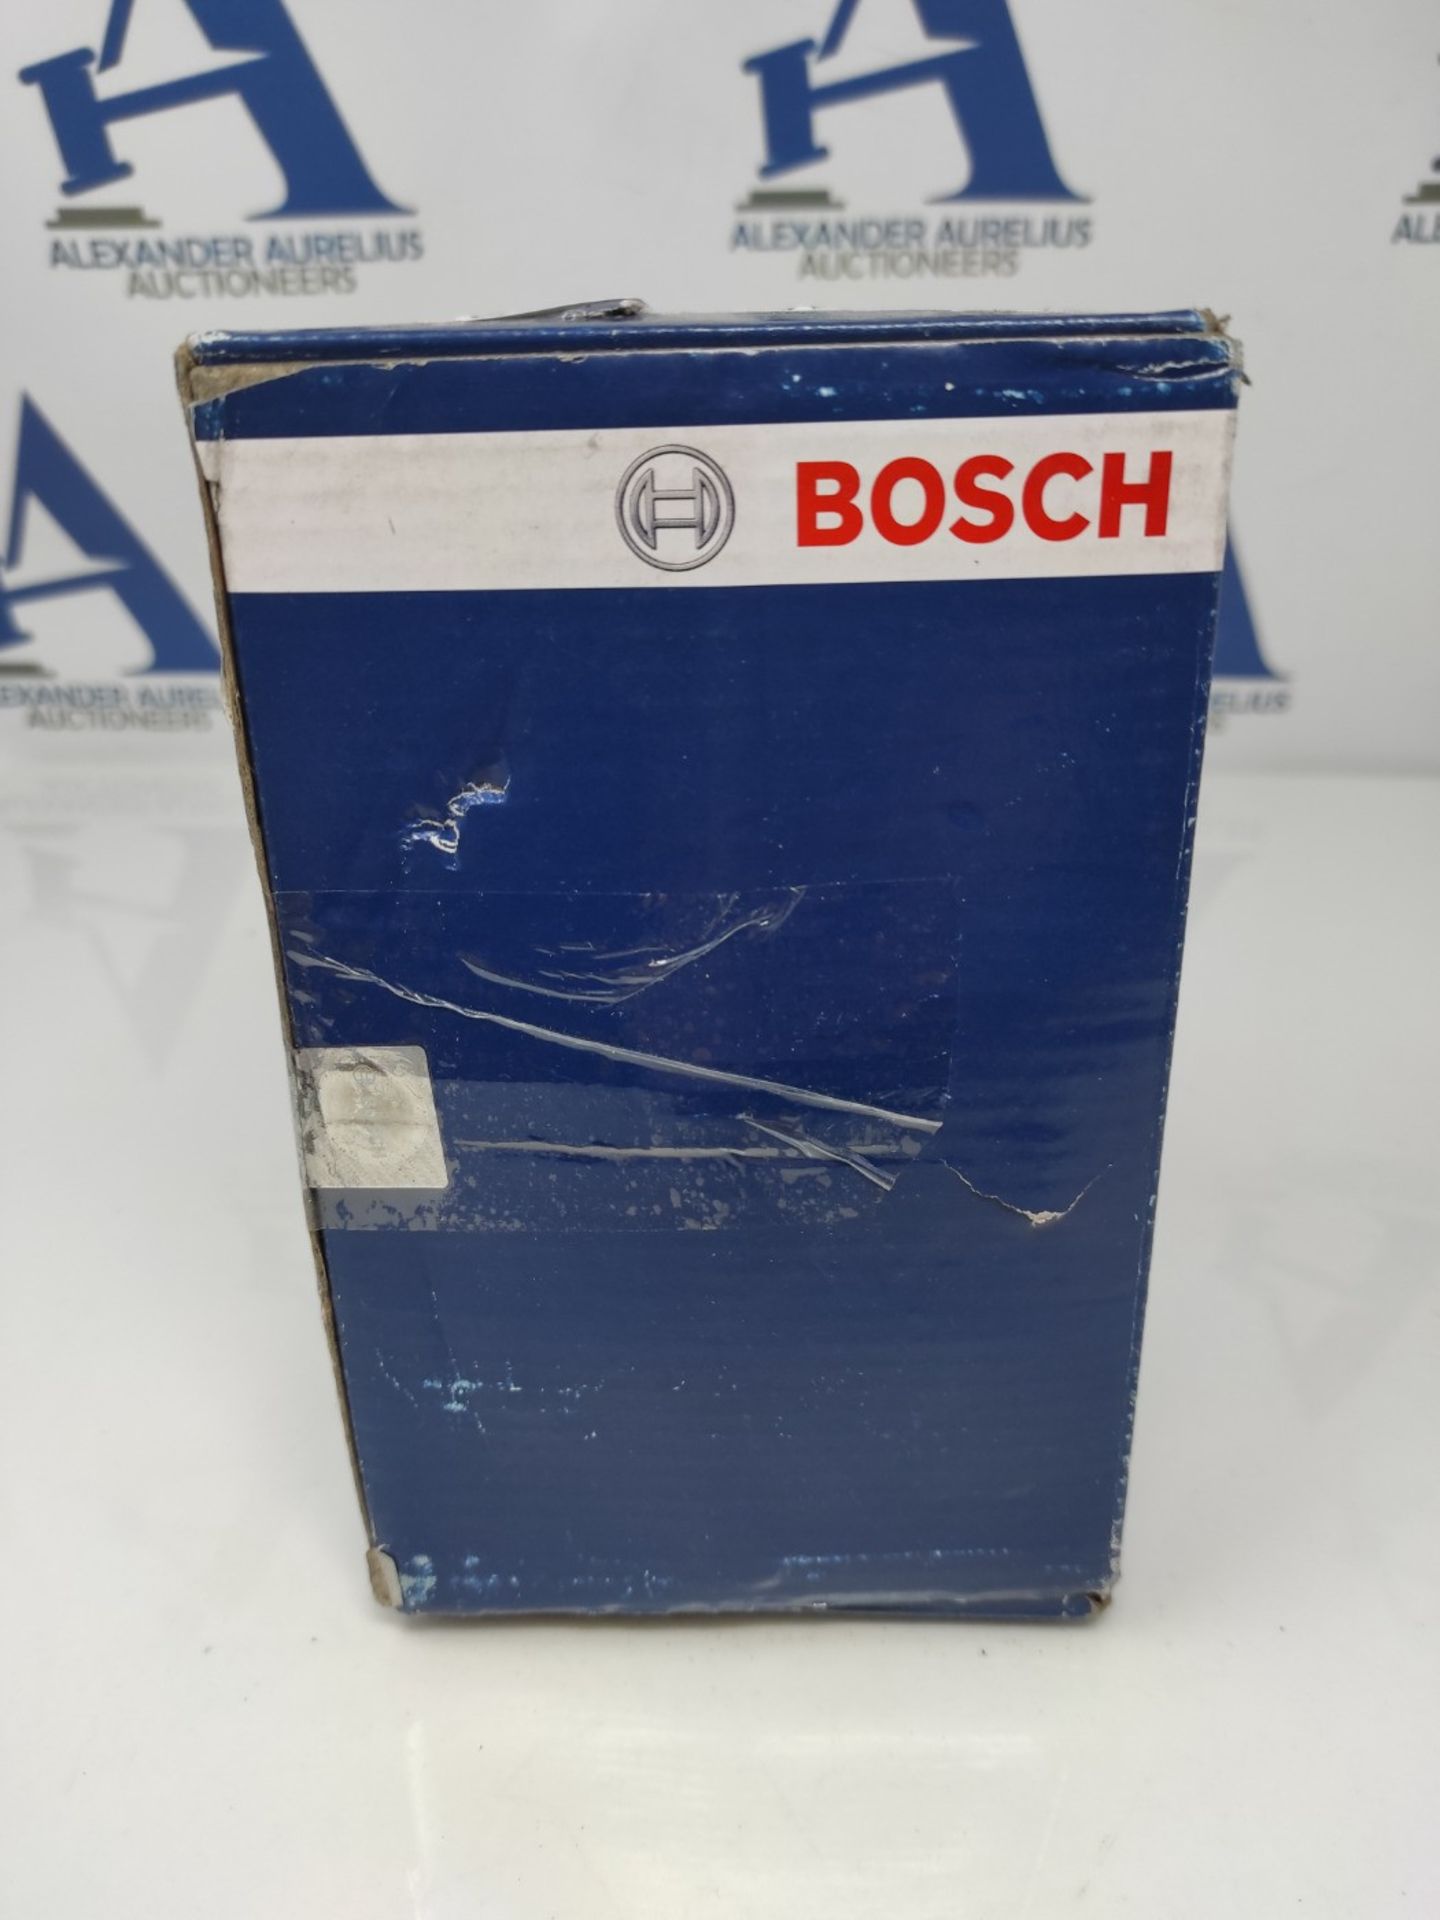 Bosch BP1445 brake pads - front axle - ECE-R90 certification - four brake pads per set - Bild 2 aus 3